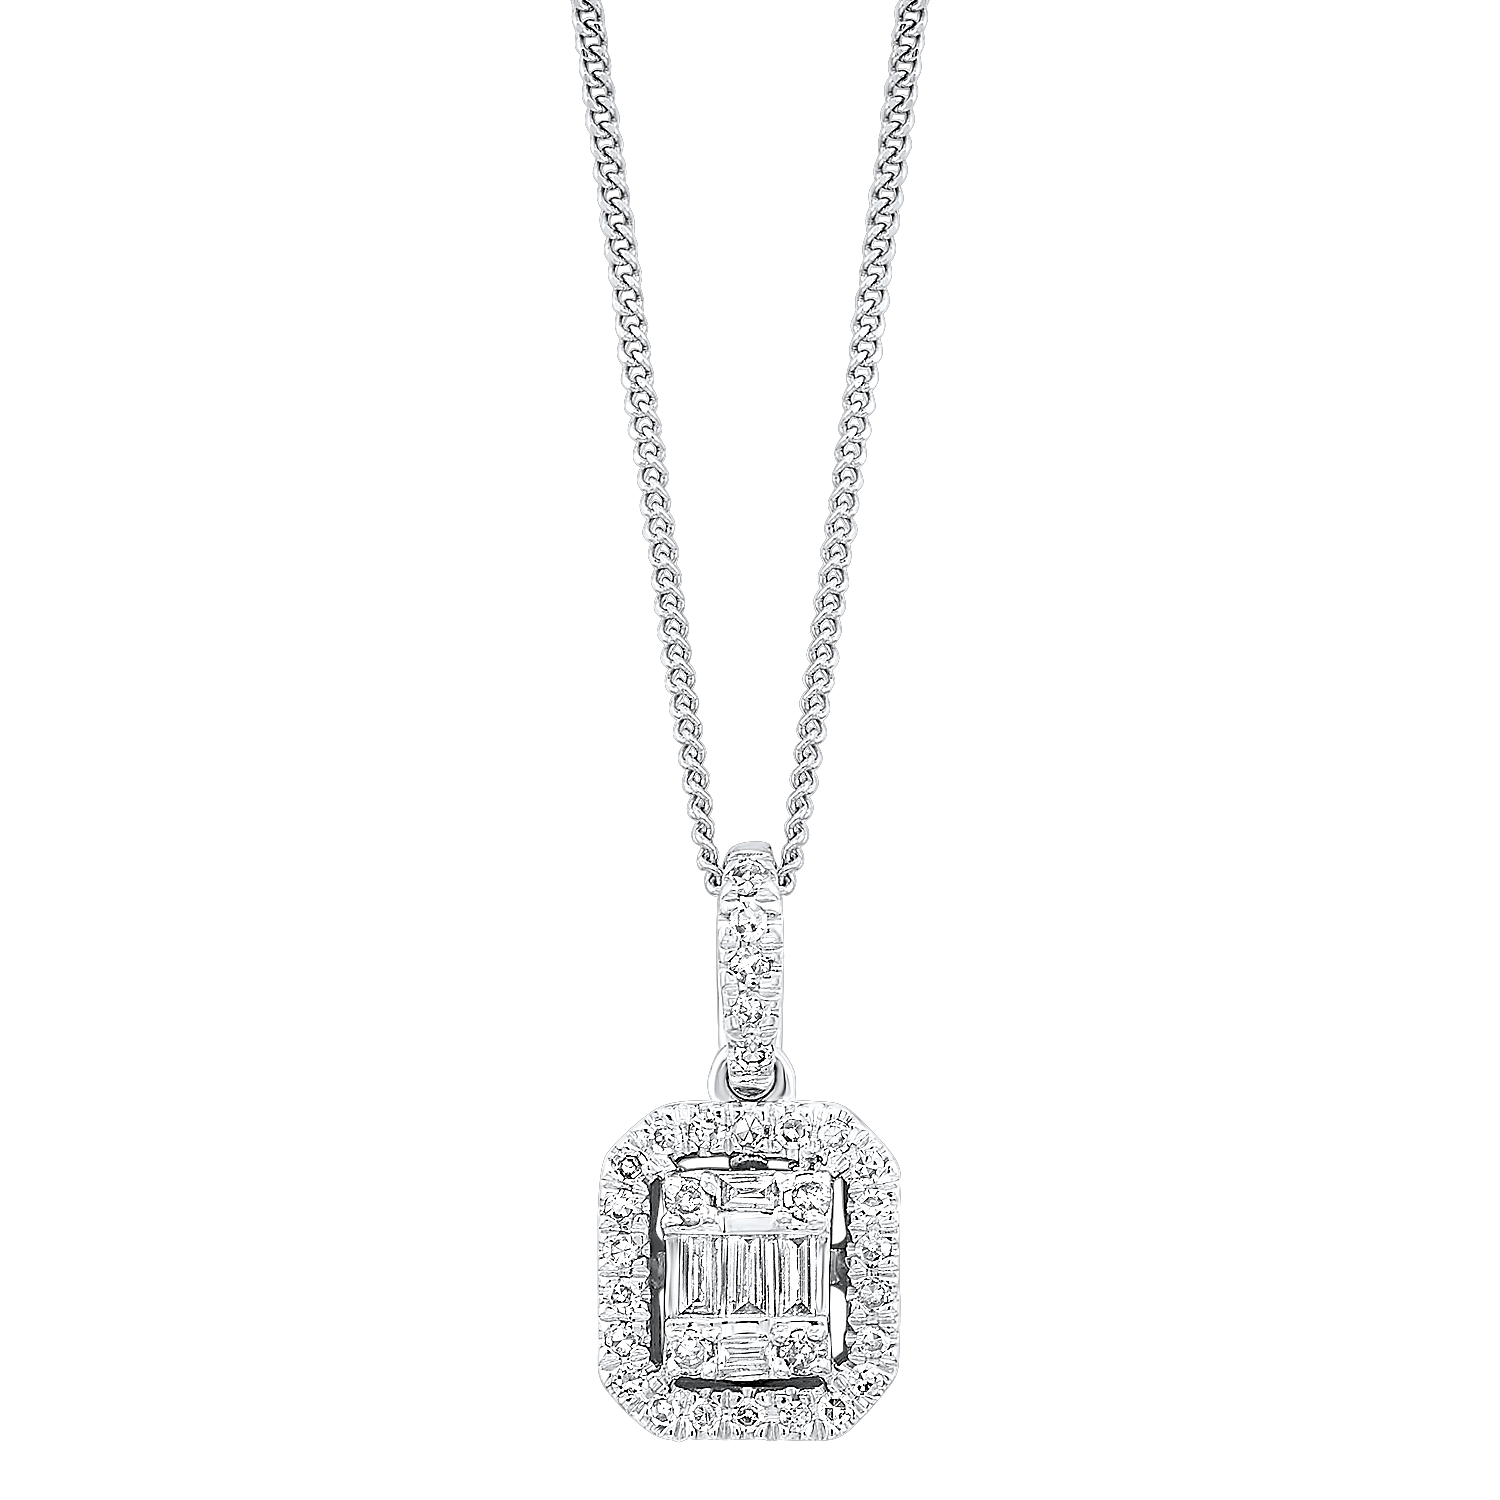 BW James Jewelers Pendant 16 Page Christmas Catalog Offer 14K Diamond Pendant 1/2ctw